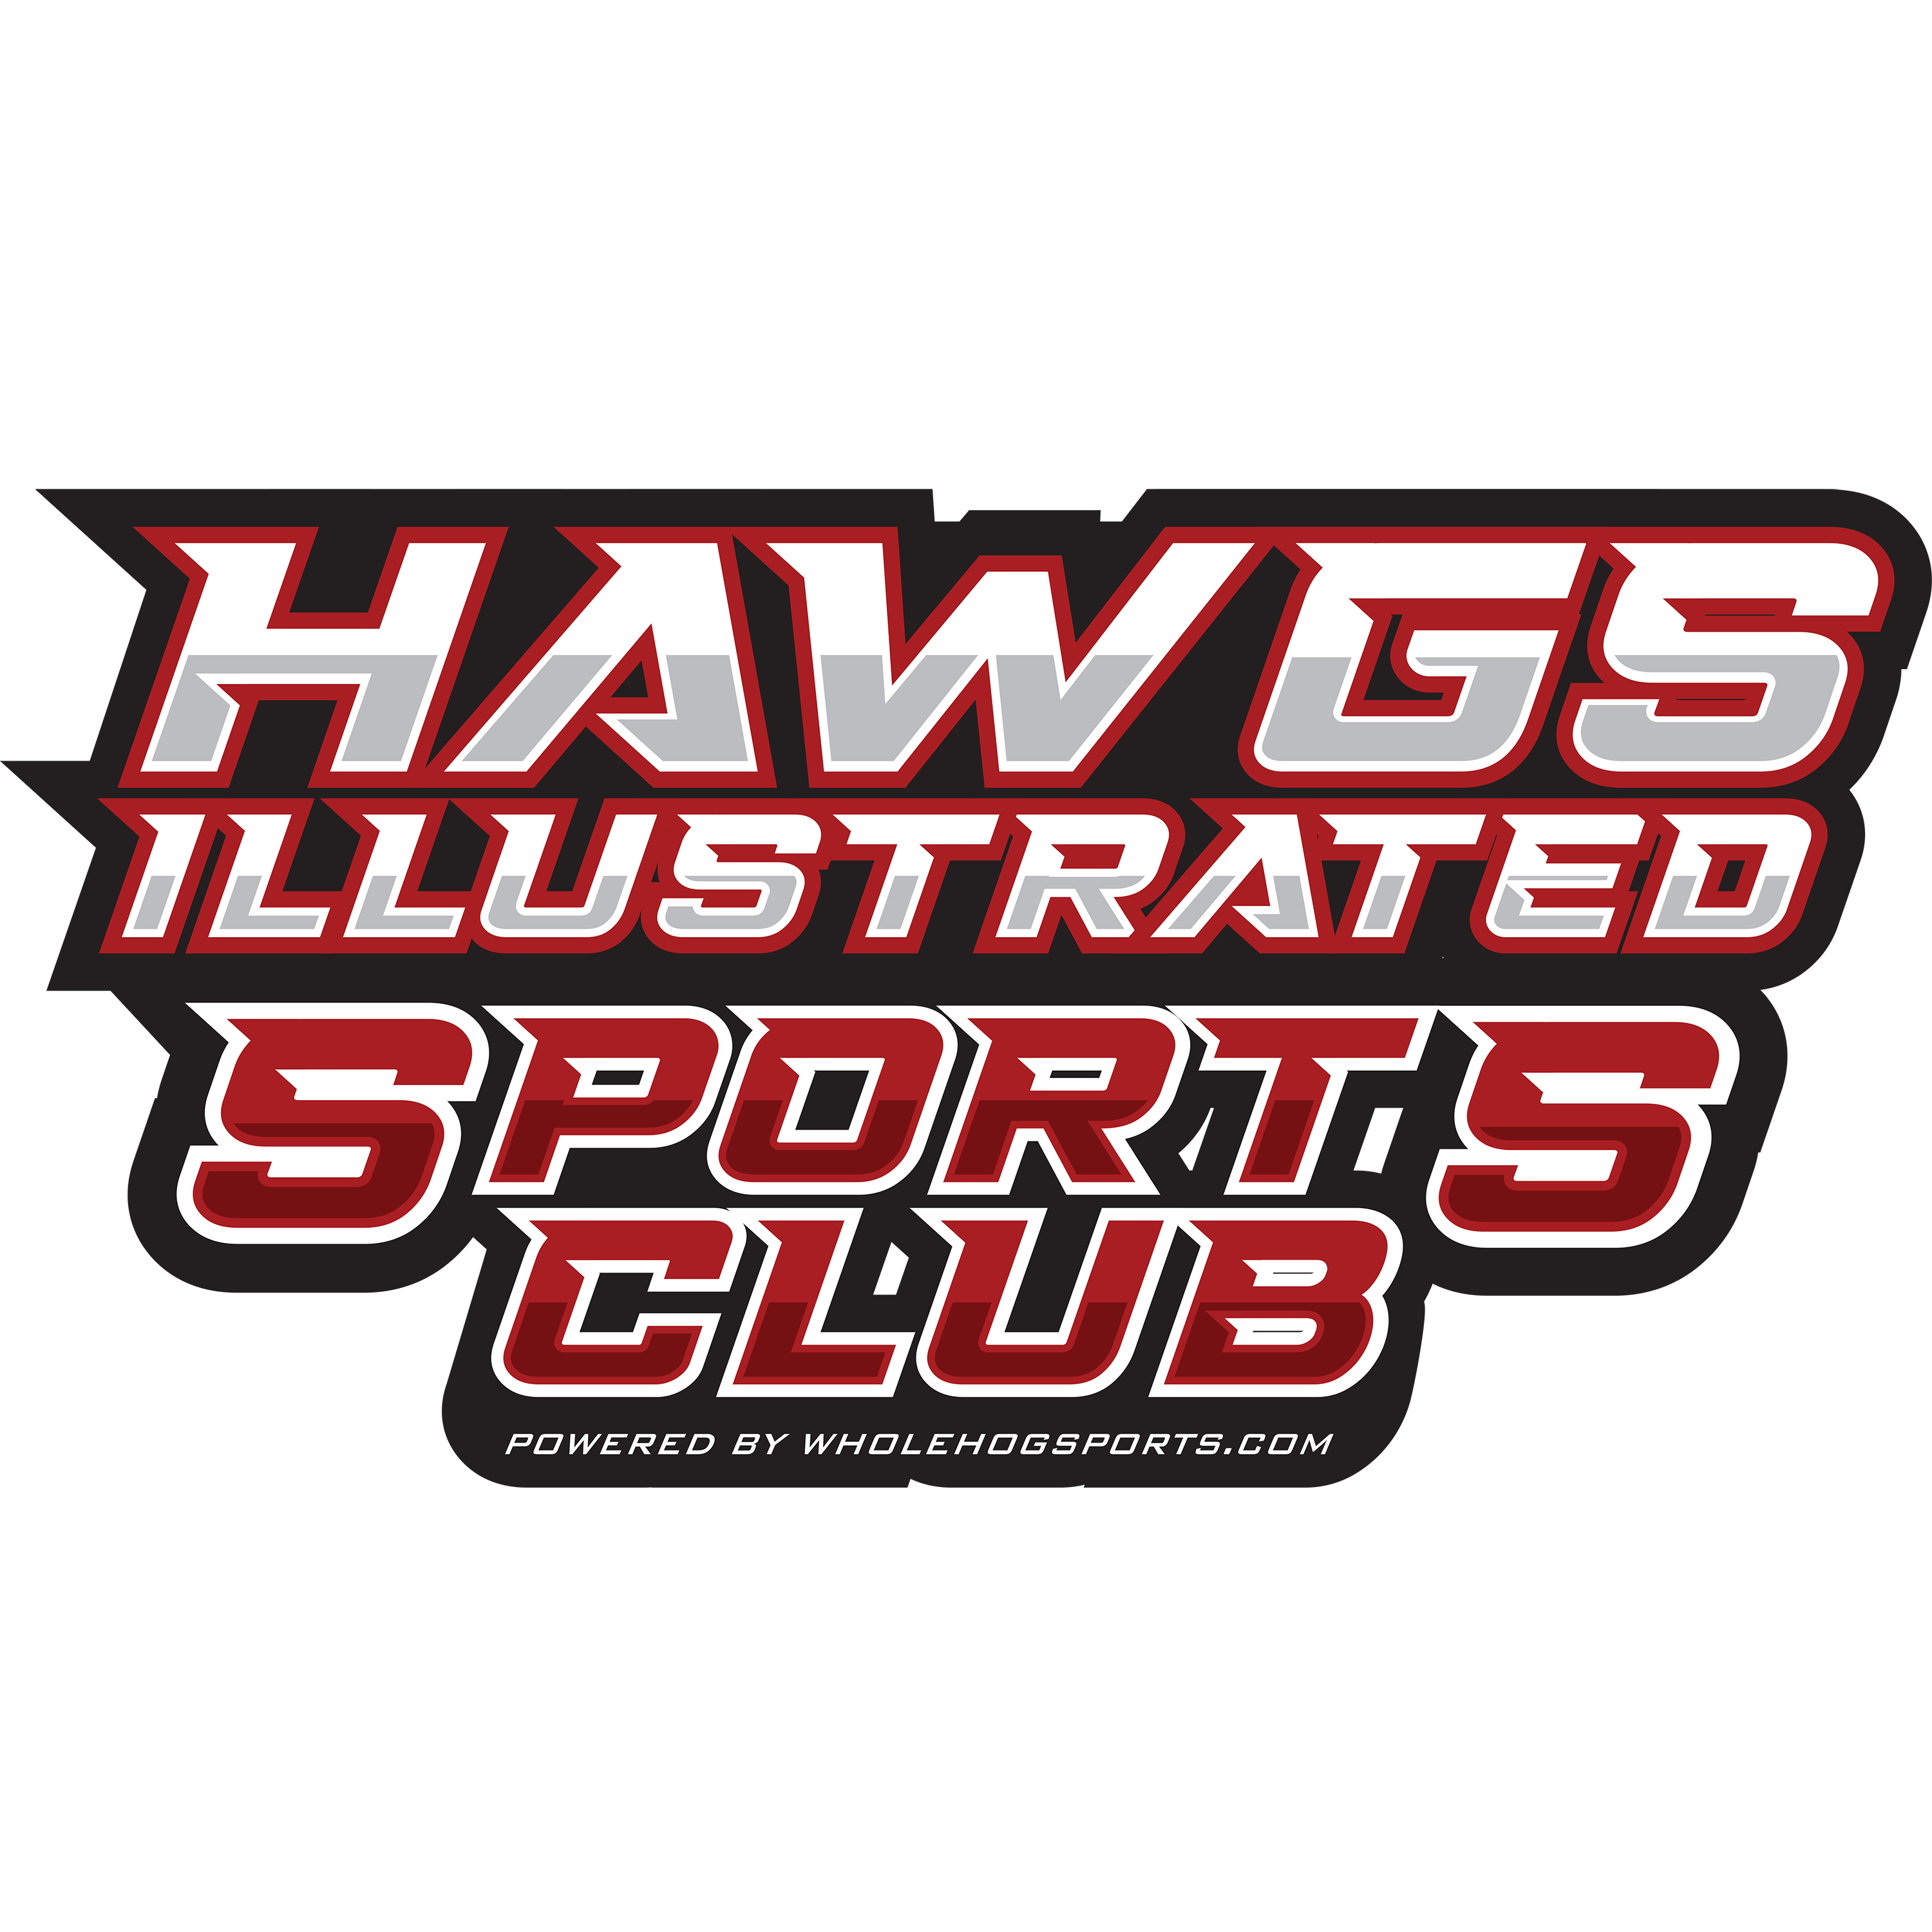 Hawgs Illustrated Sports Club Podcast: Guest speaker Hunter Yurachek